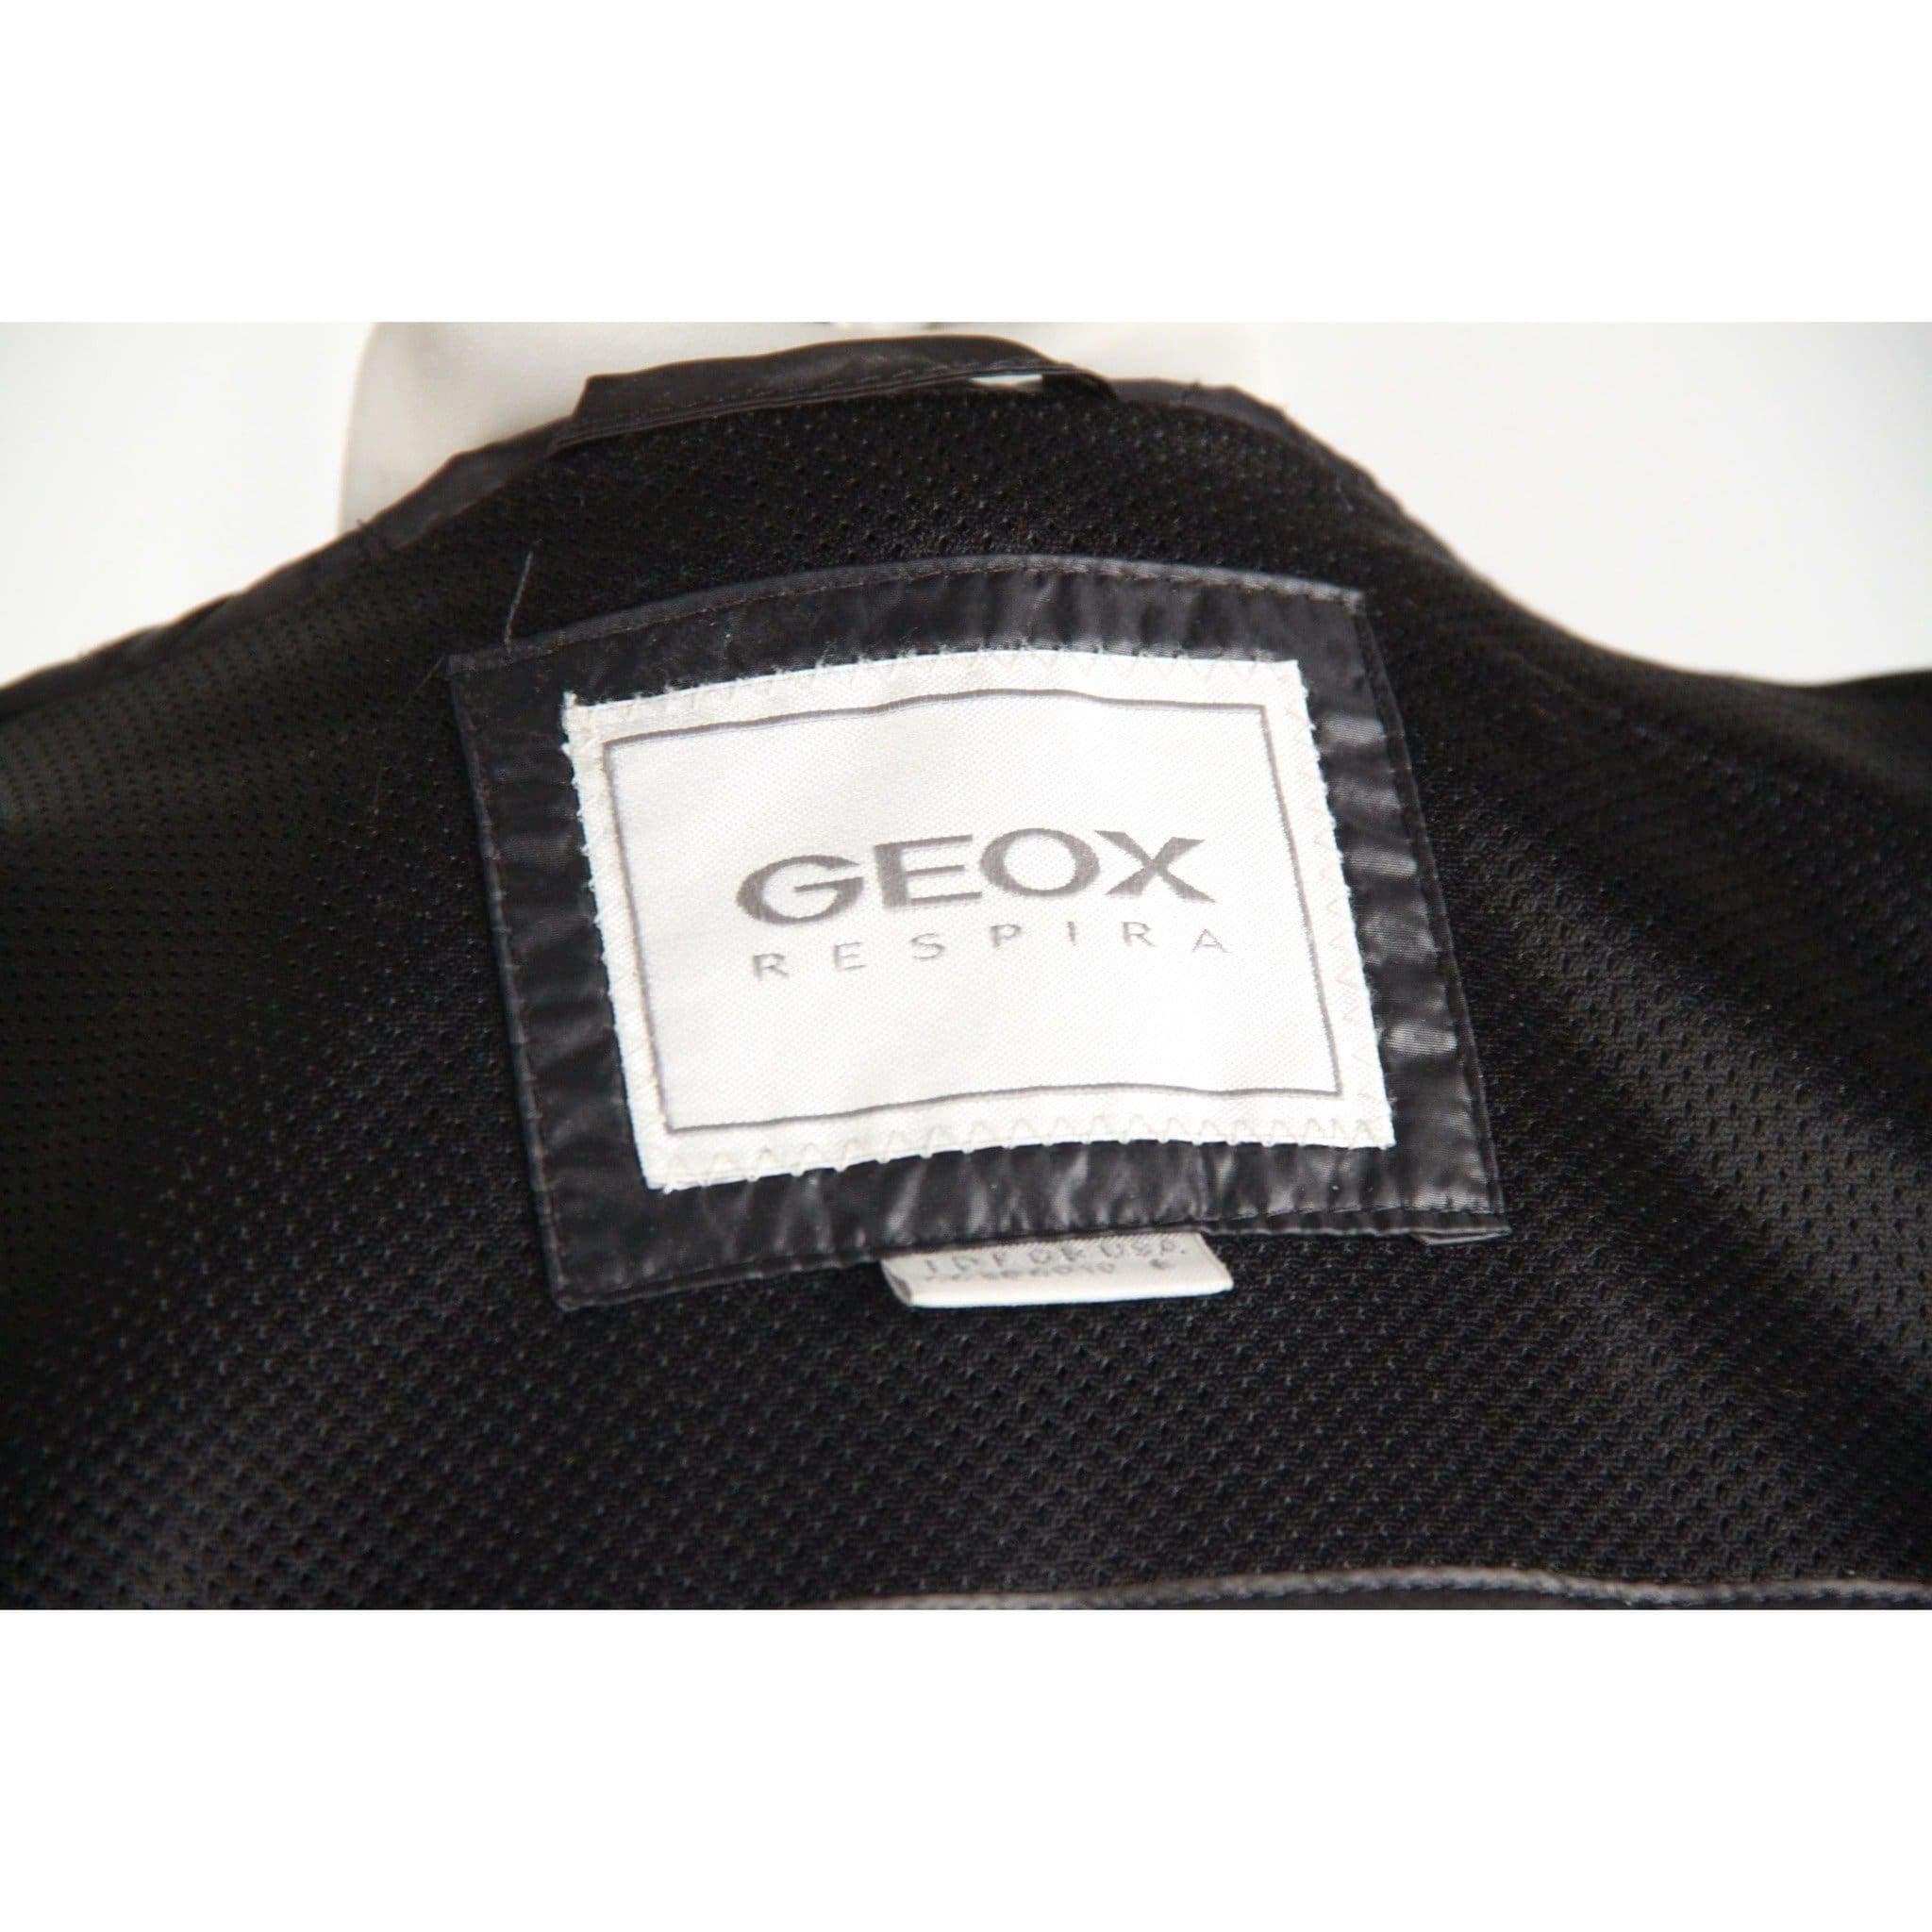 GEOX Black Wool Blend MID LENGHT JACKET Coat HOODED Size 44 1